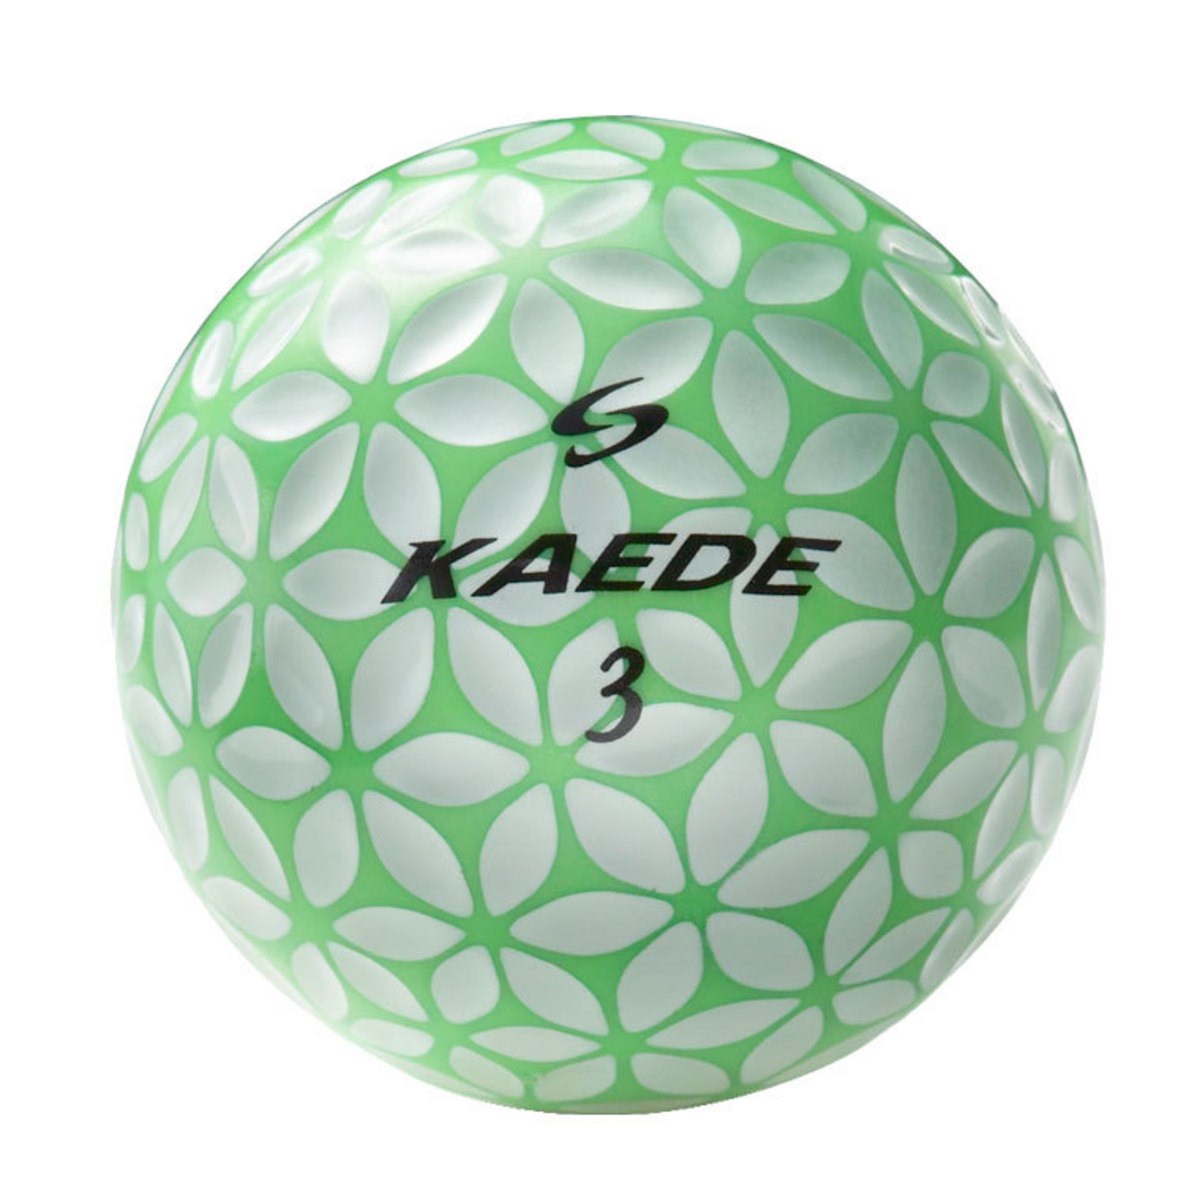 Kaede カエデ ボール 1スリーブ 3個入り ボール 新品 Kaede サソー の通販 Gdoゴルフショップ